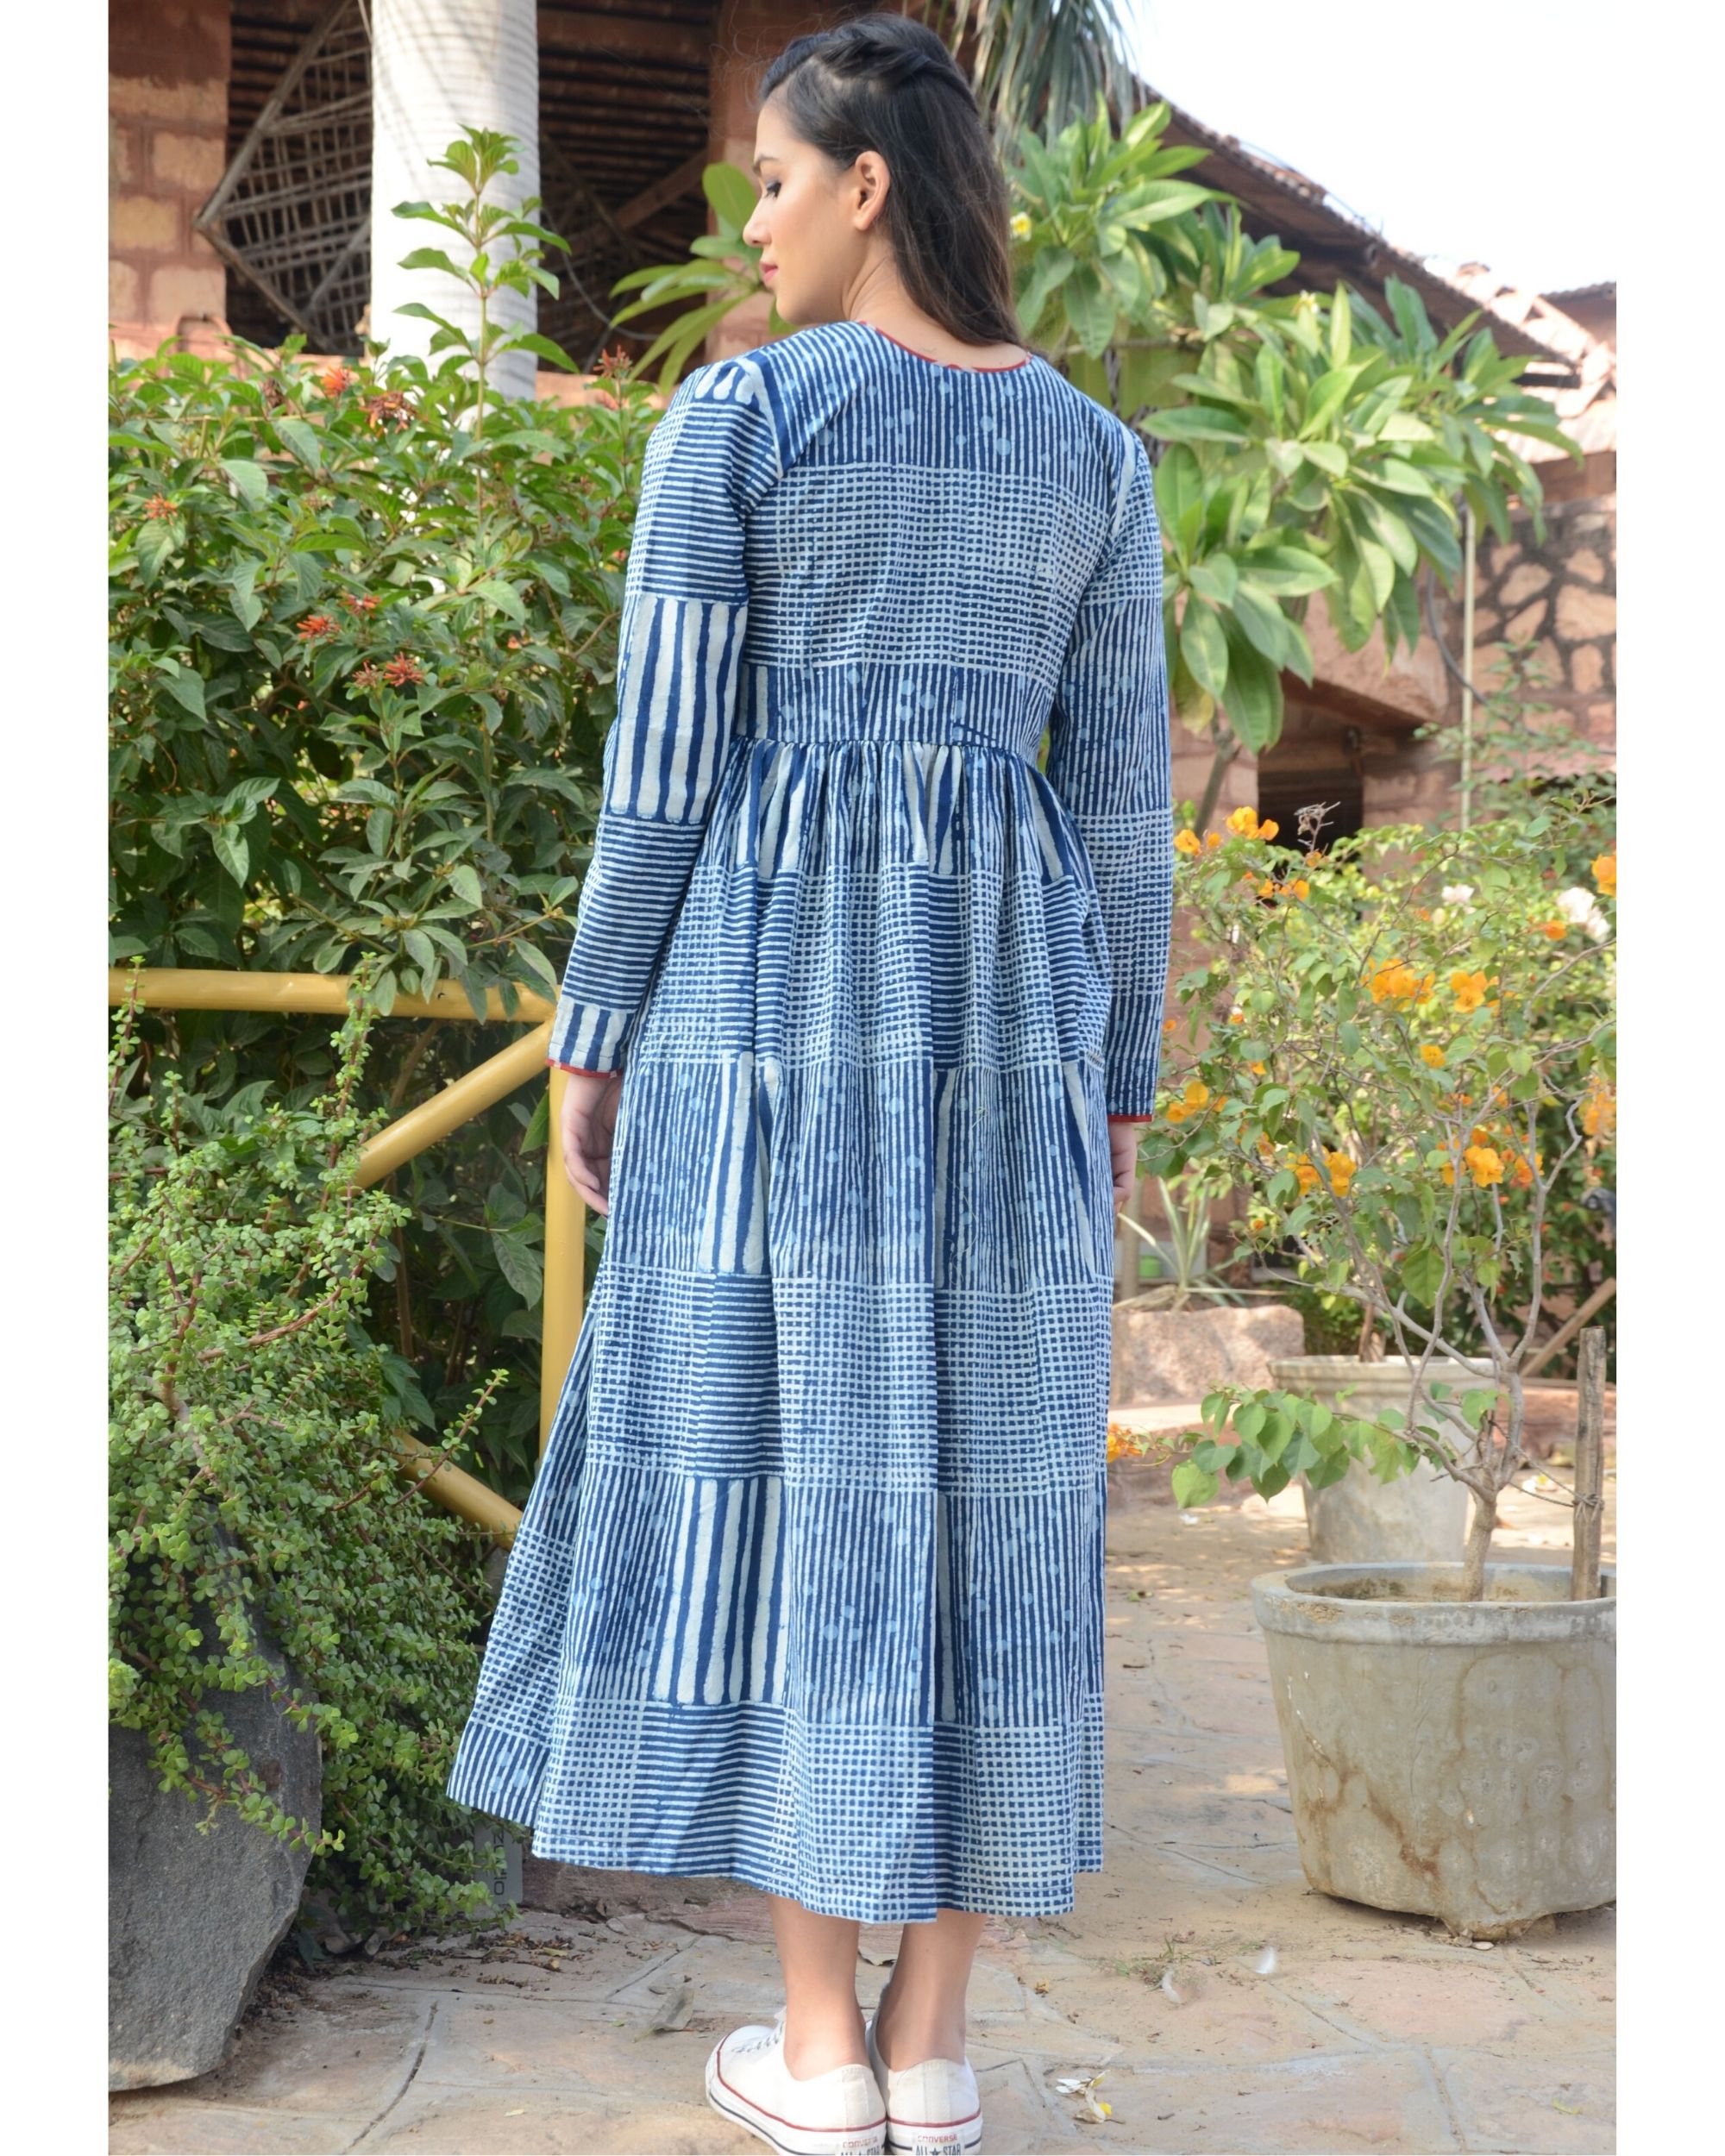 Indigo printed gathers dress by Medhya | The Secret Label